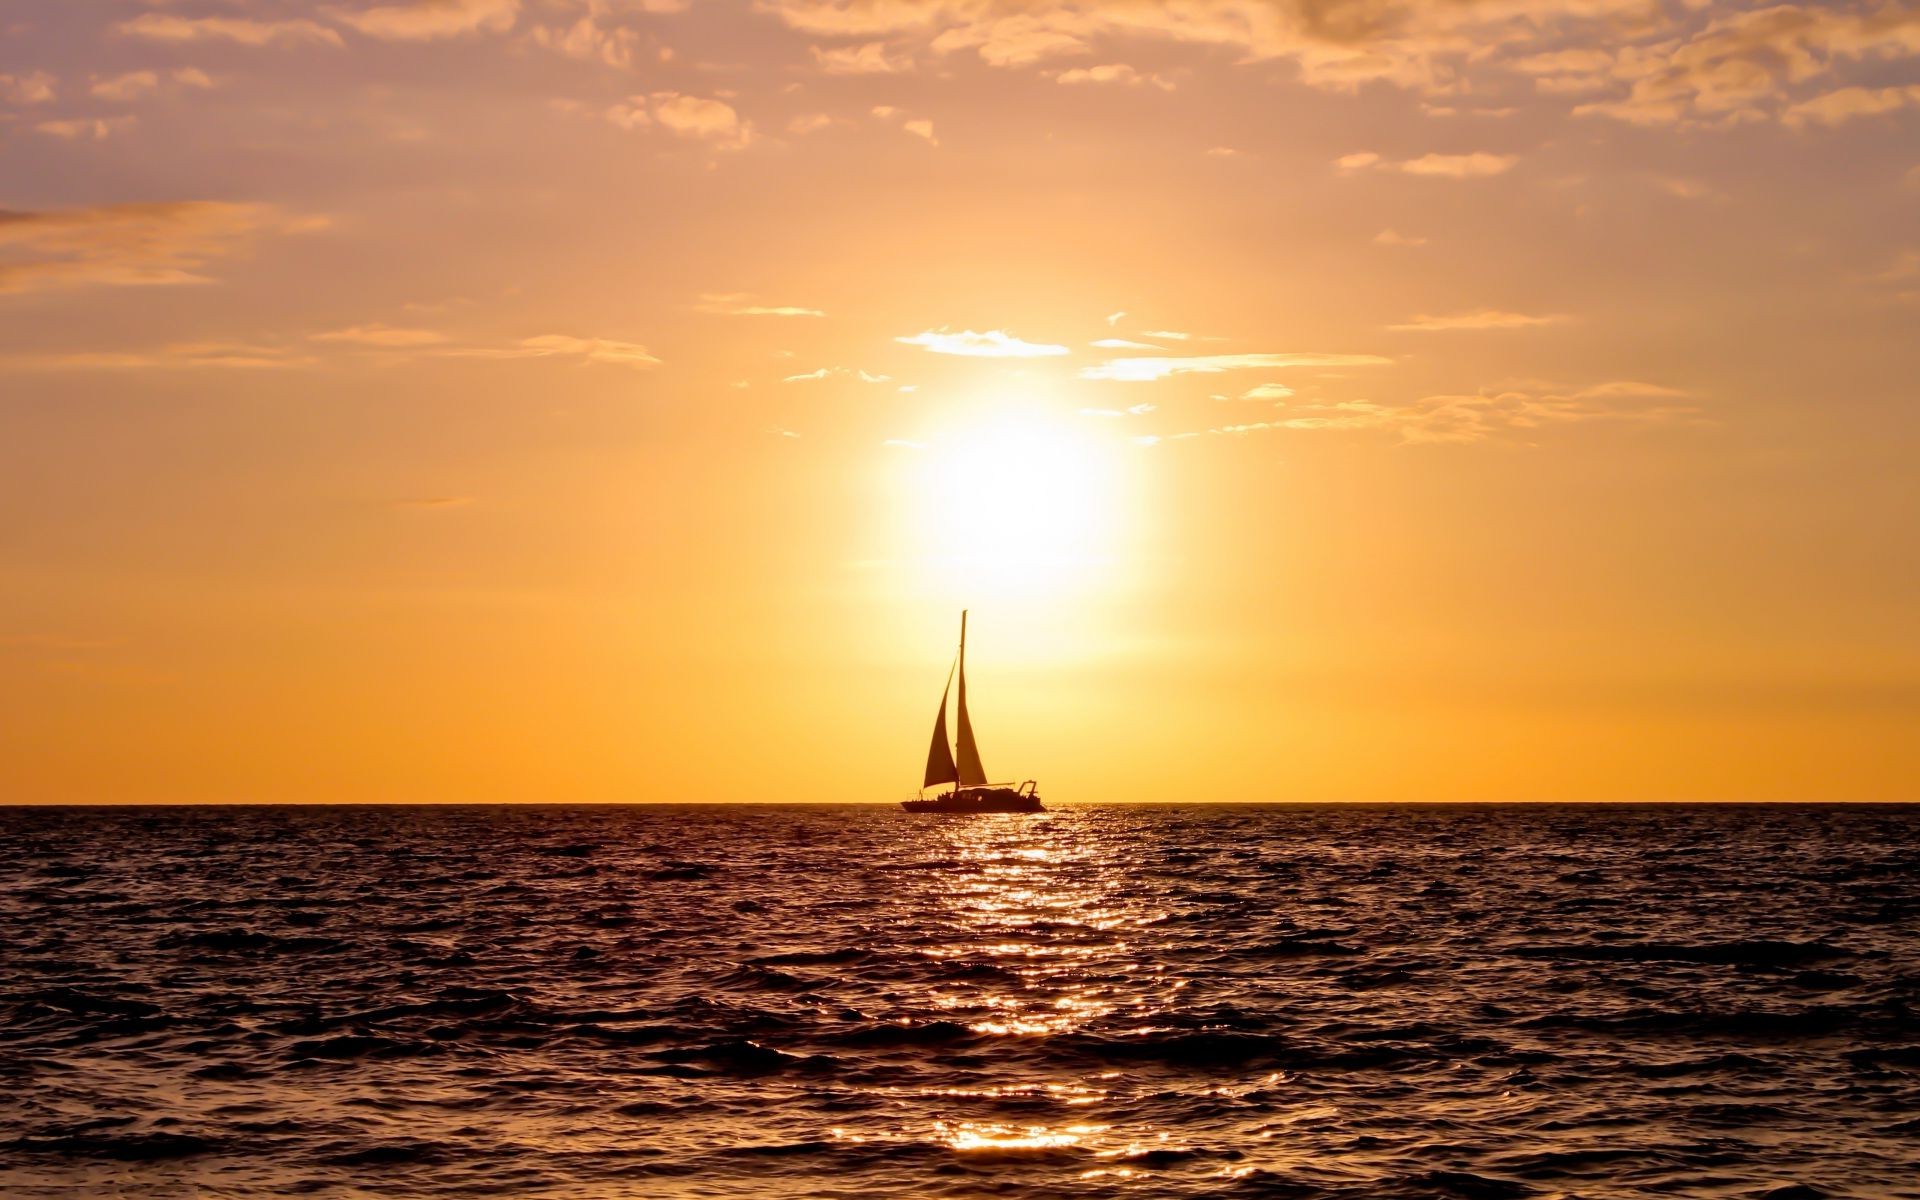 the sunset and sunrise sunset water sea dawn ocean sun boat dusk sailboat evening seascape beach watercraft sky reflection ship light summer